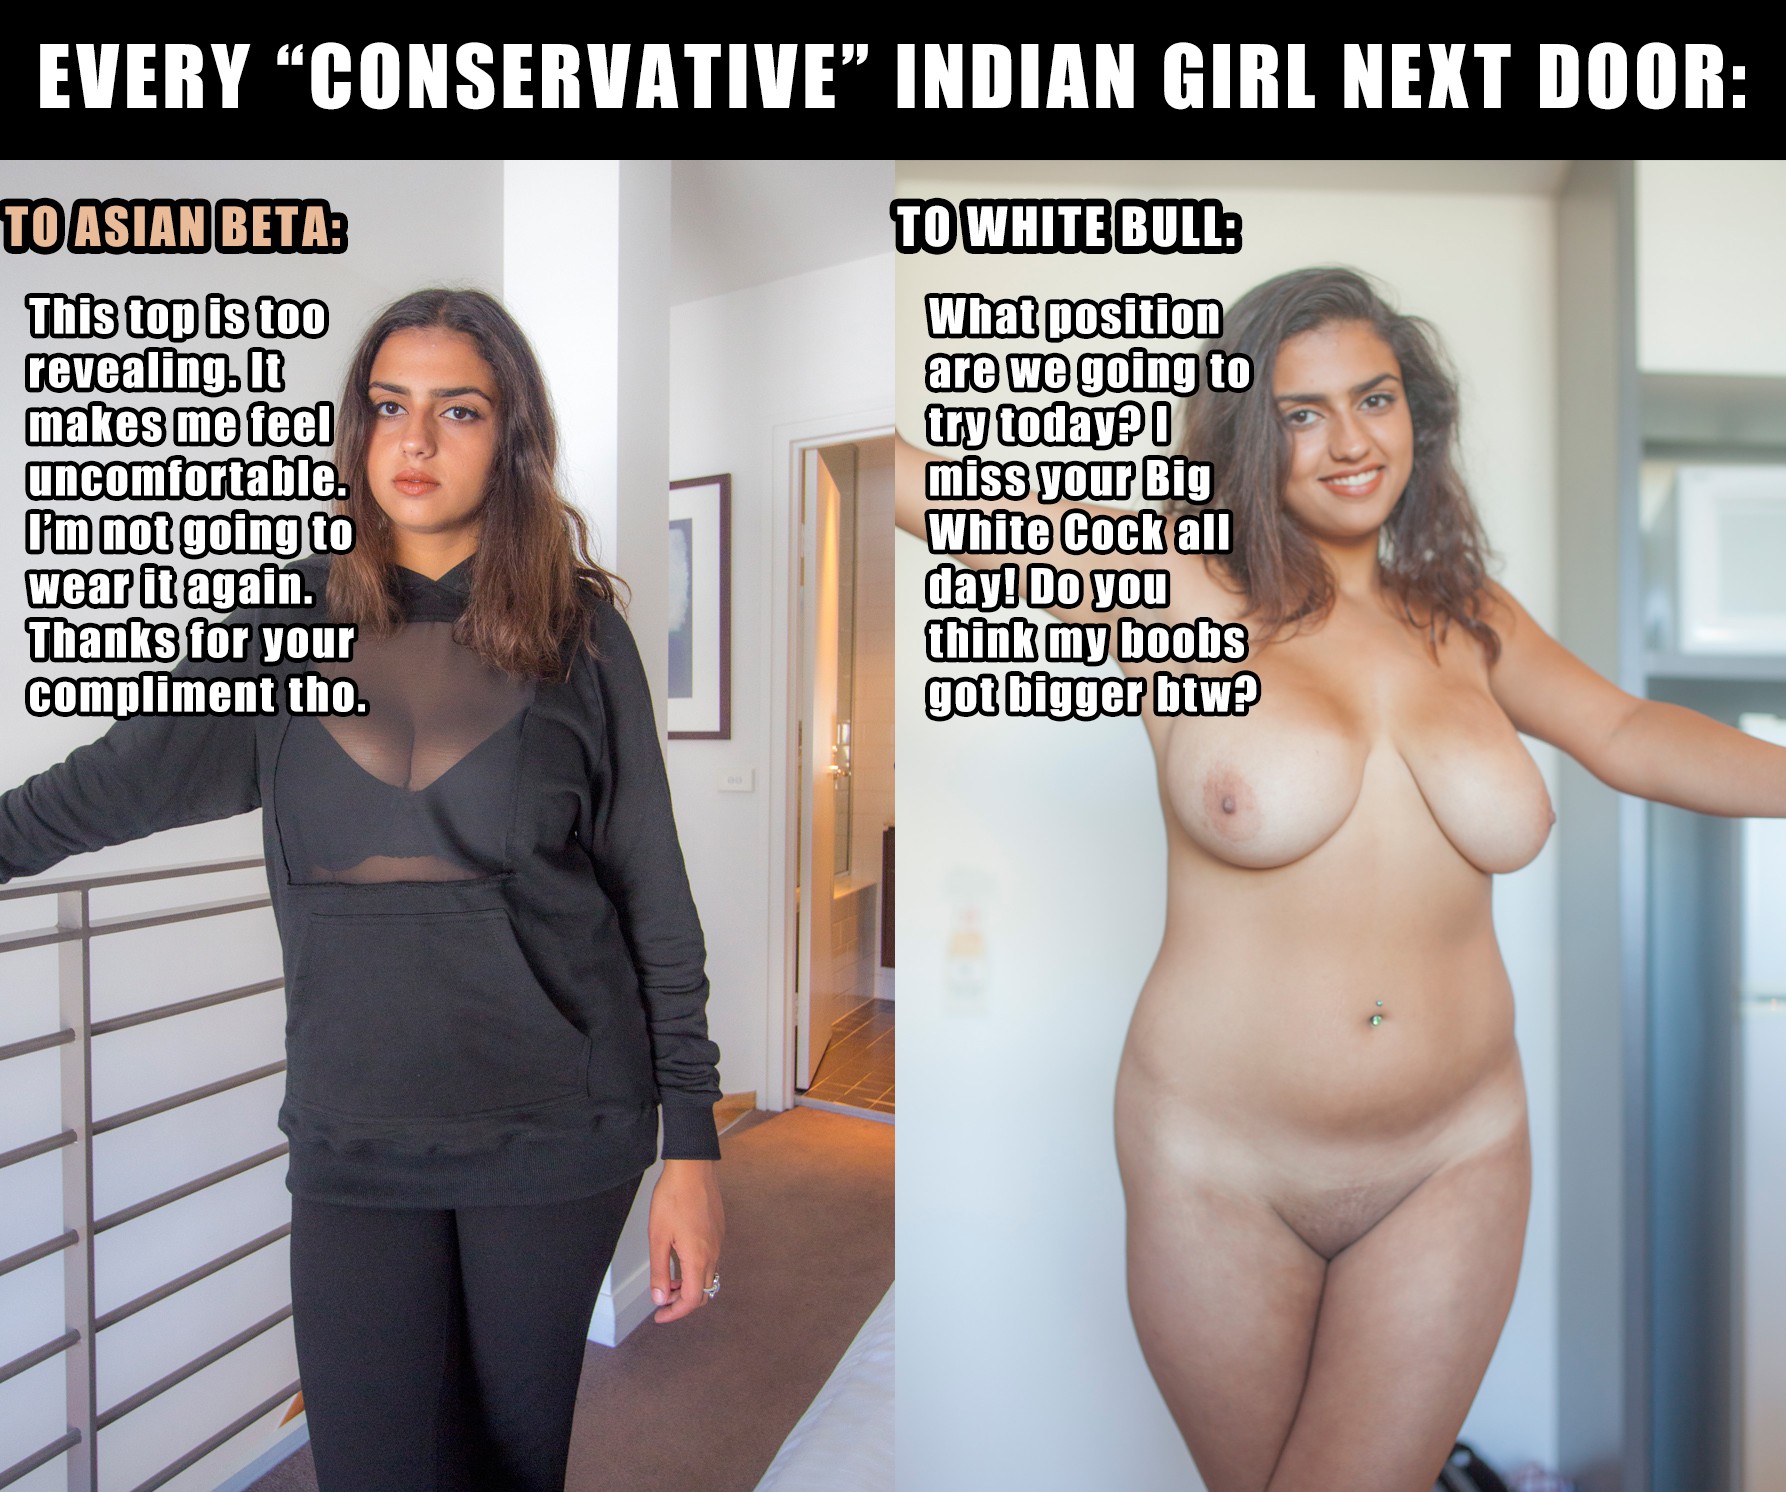 Indian Big White Cock - Indian girl next door reacts to white bull cock vs beta dick - Freakden